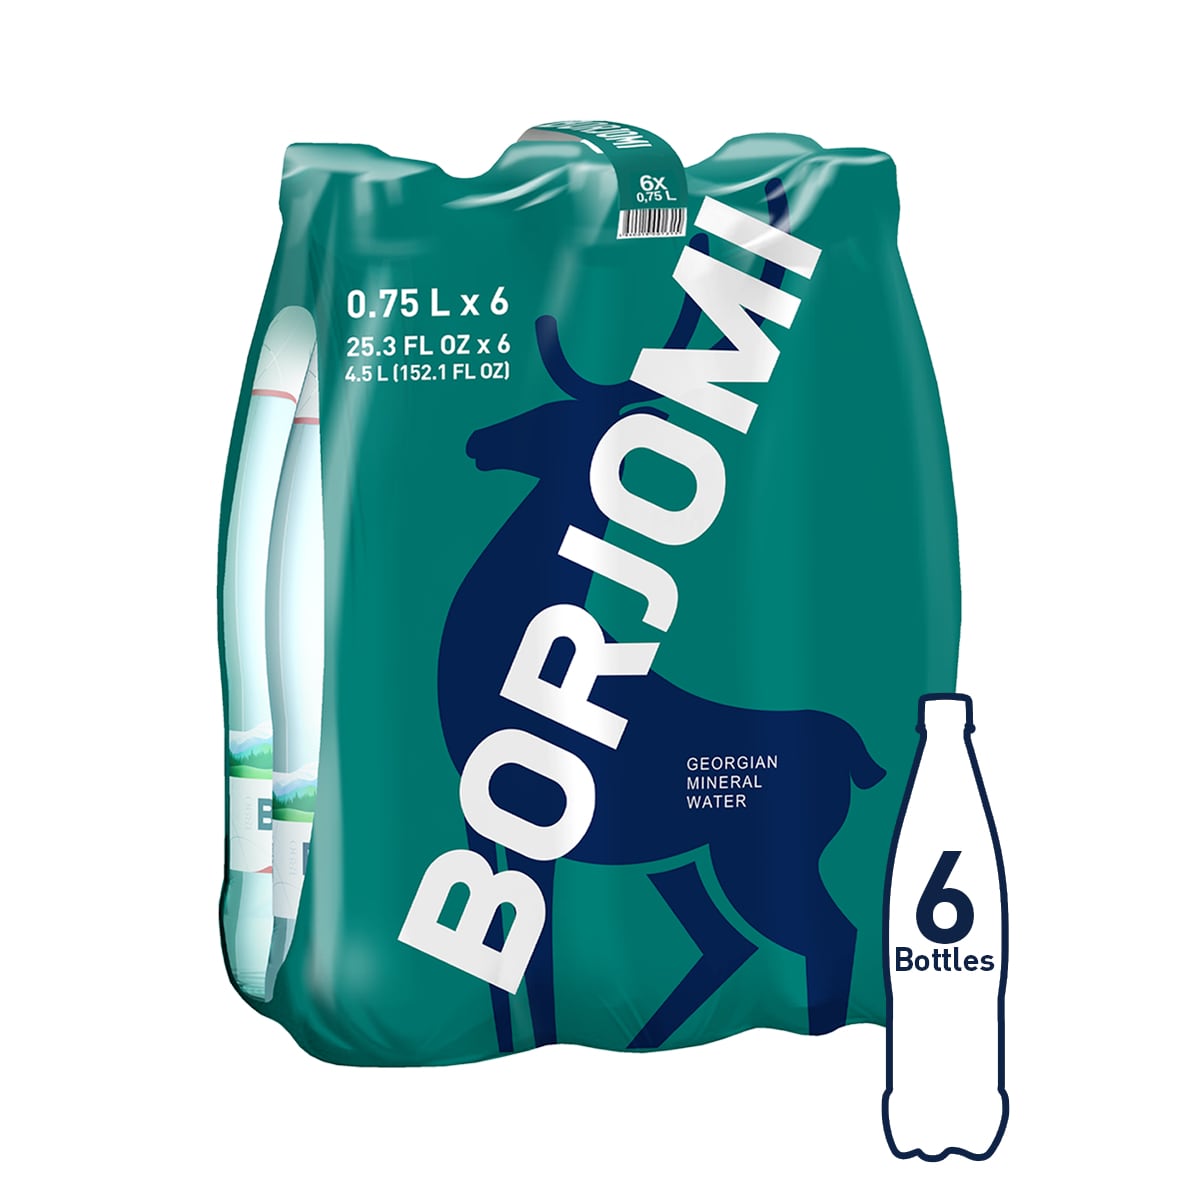 Borjomi Sparkling Water, 25.3 Fl. Oz. Plastic Bottles (6 Pack)